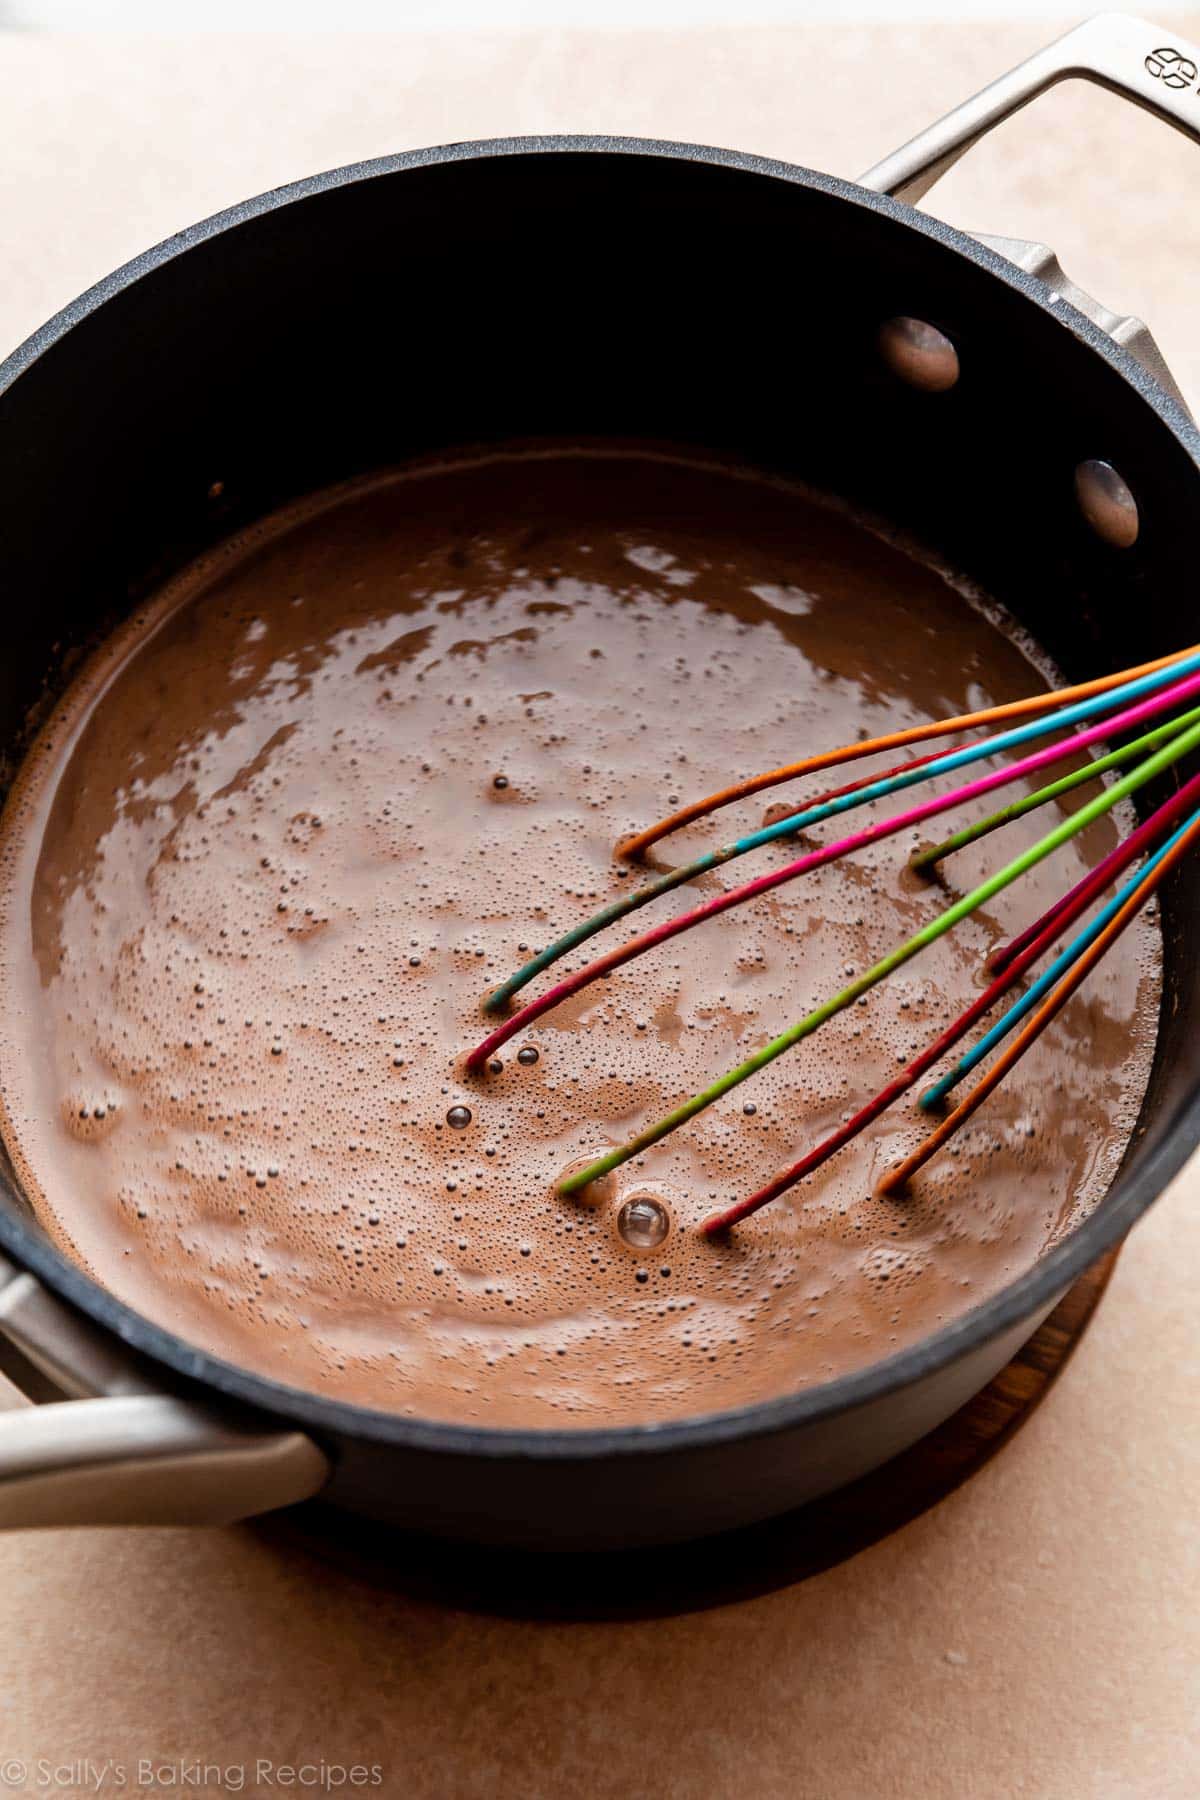 chocolate liquid mixture and rainbow whisk in saucepan.